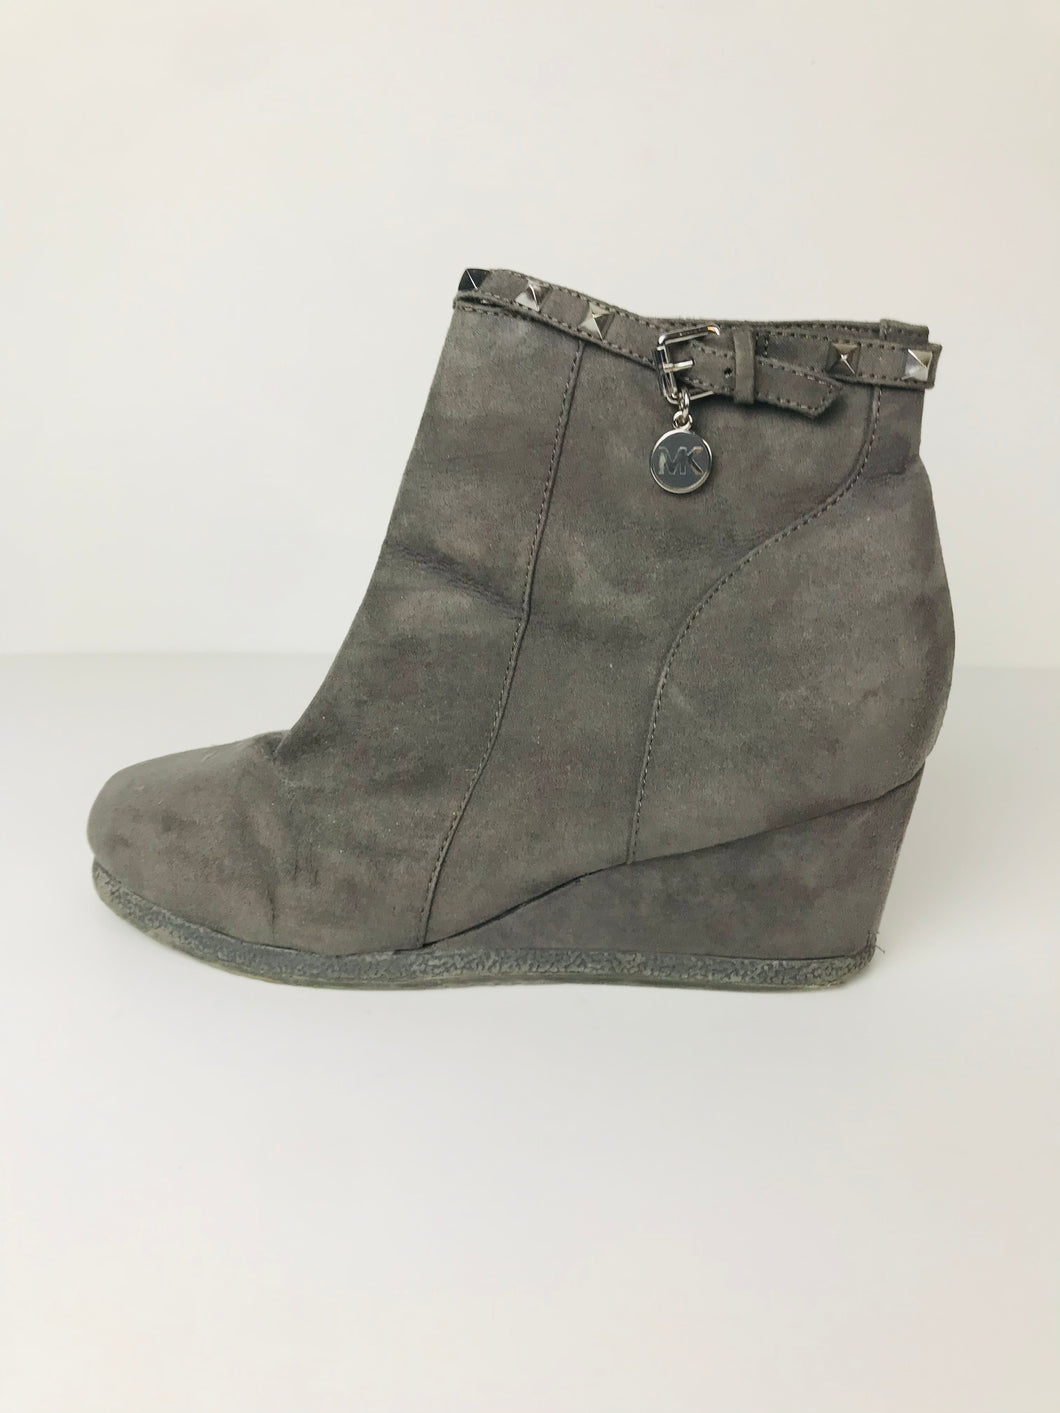 Michael Kors Women's Suede Leather Wedge Boots | UK4 | Grey